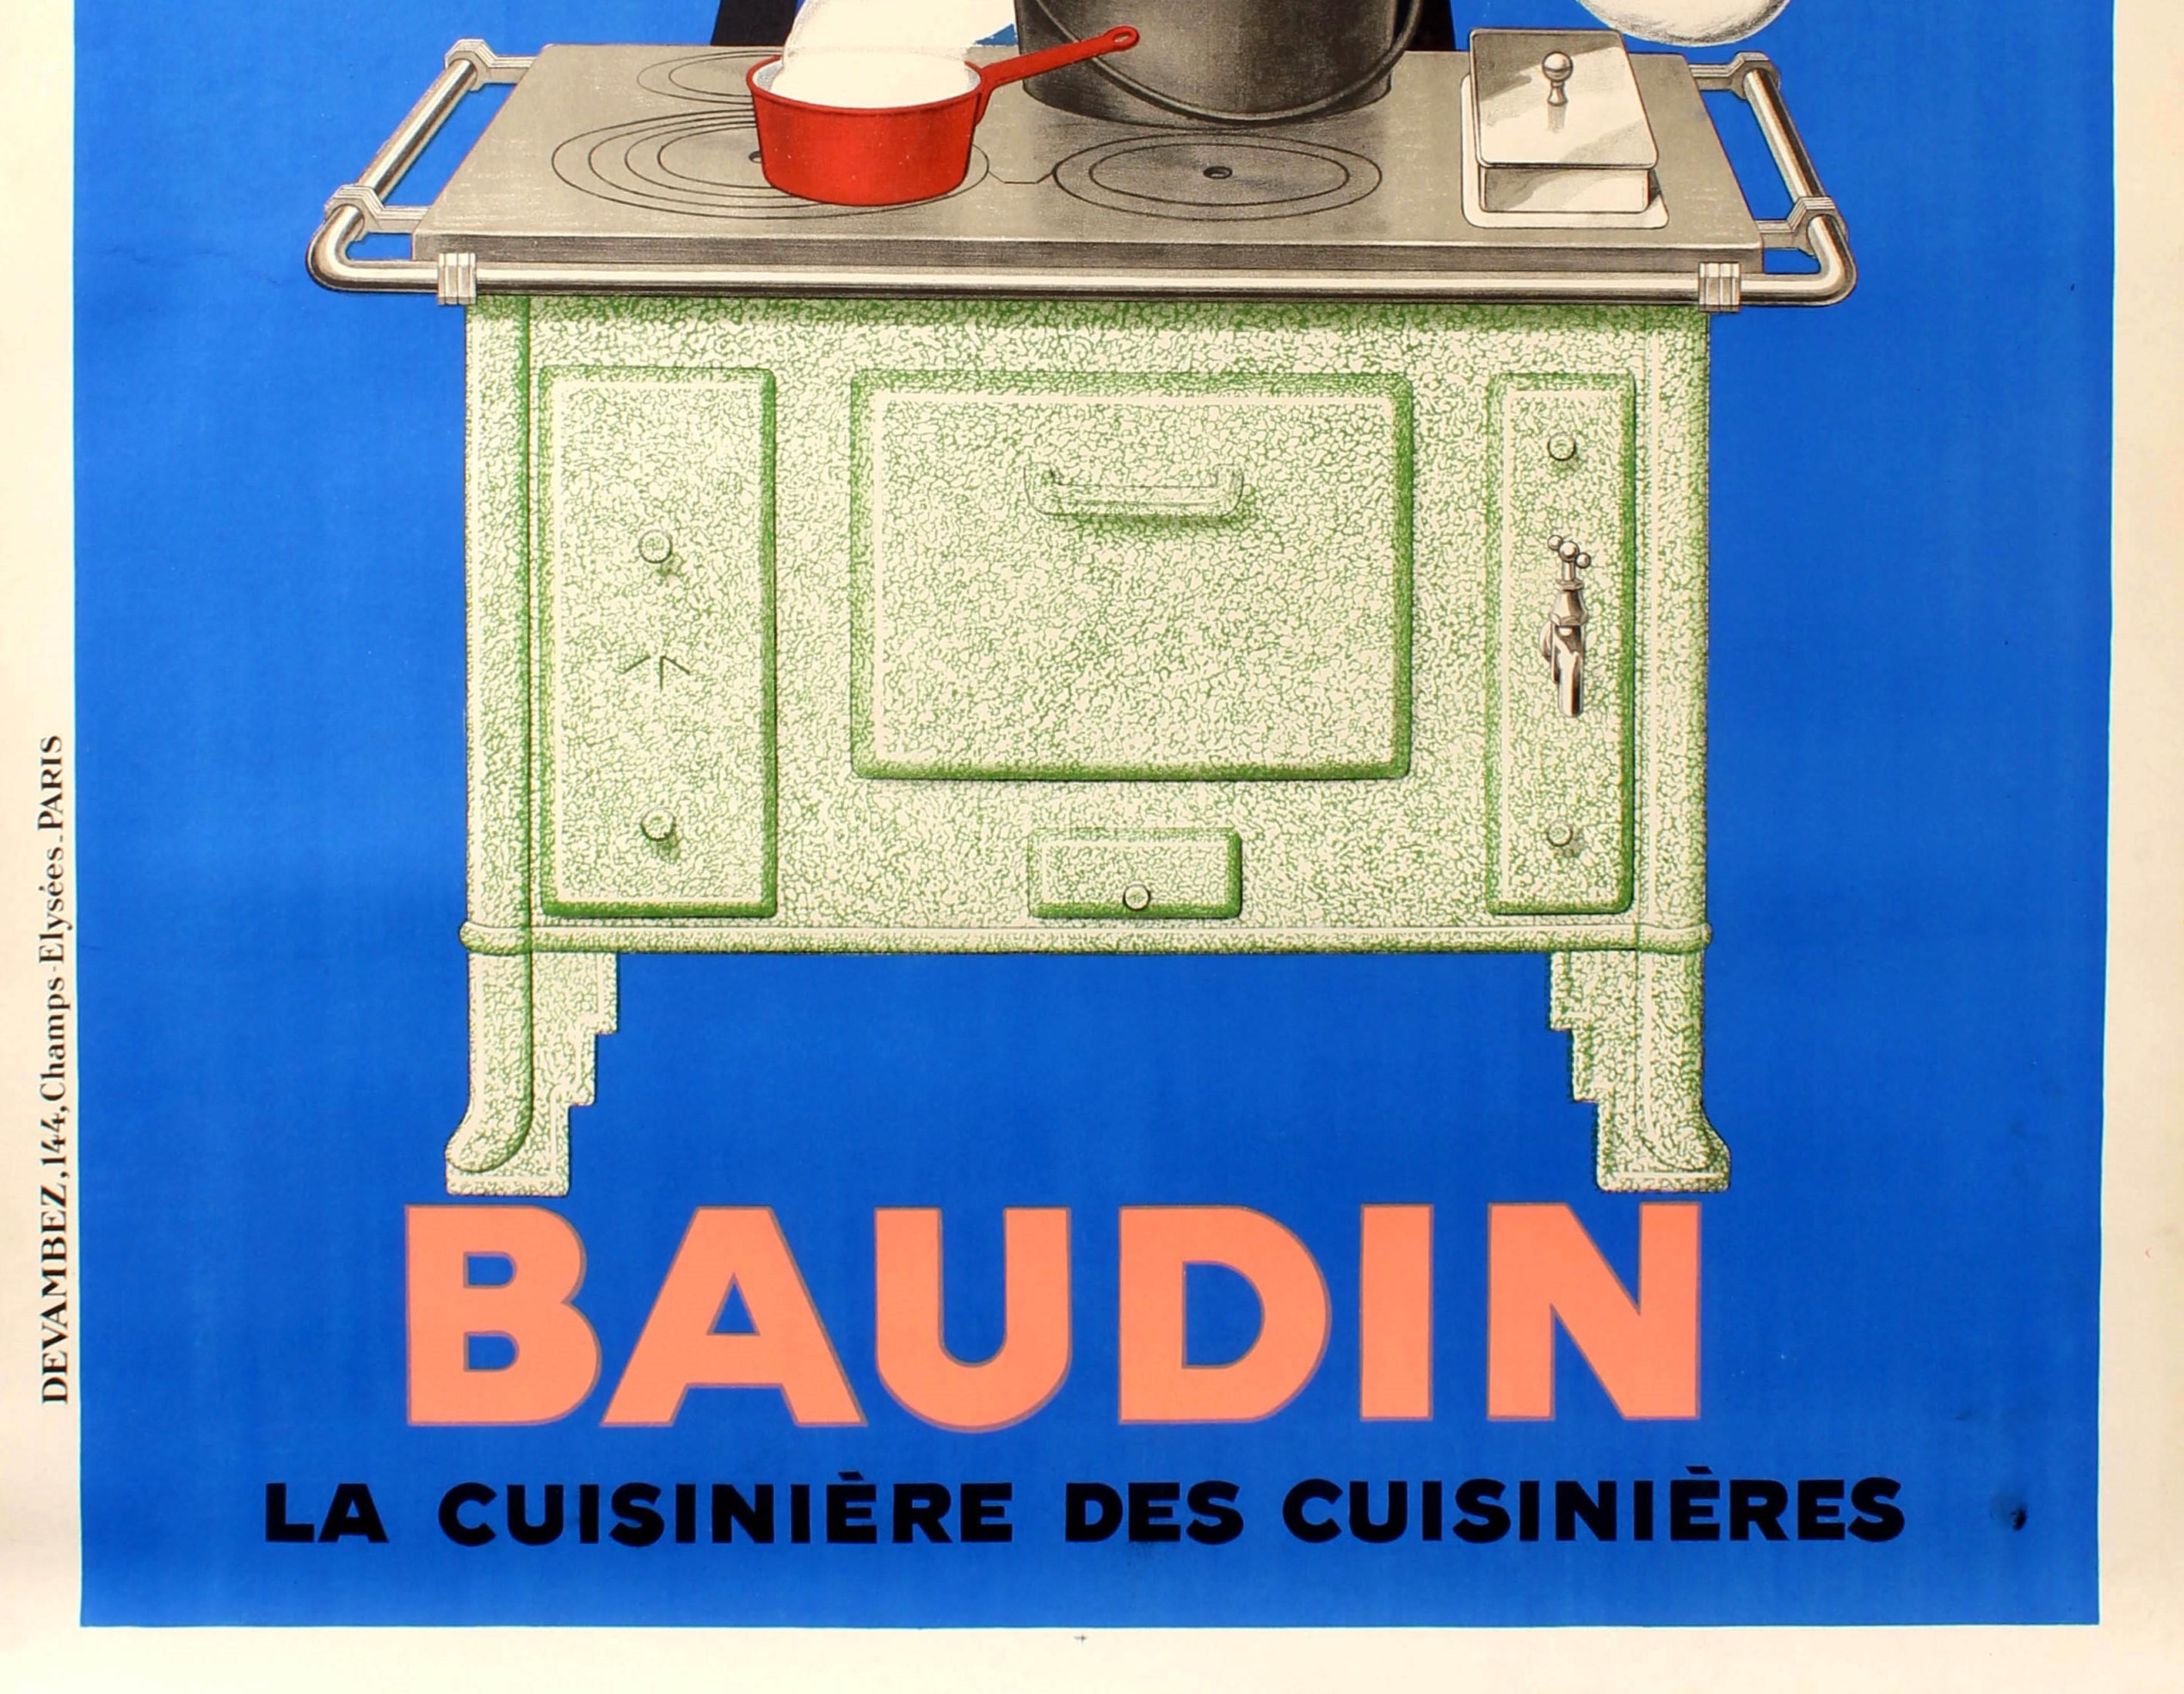 Large Original Vintage Poster By Cappiello Baudin La Cuisiniere des Cuisinieres - Blue Print by Leonetto Cappiello